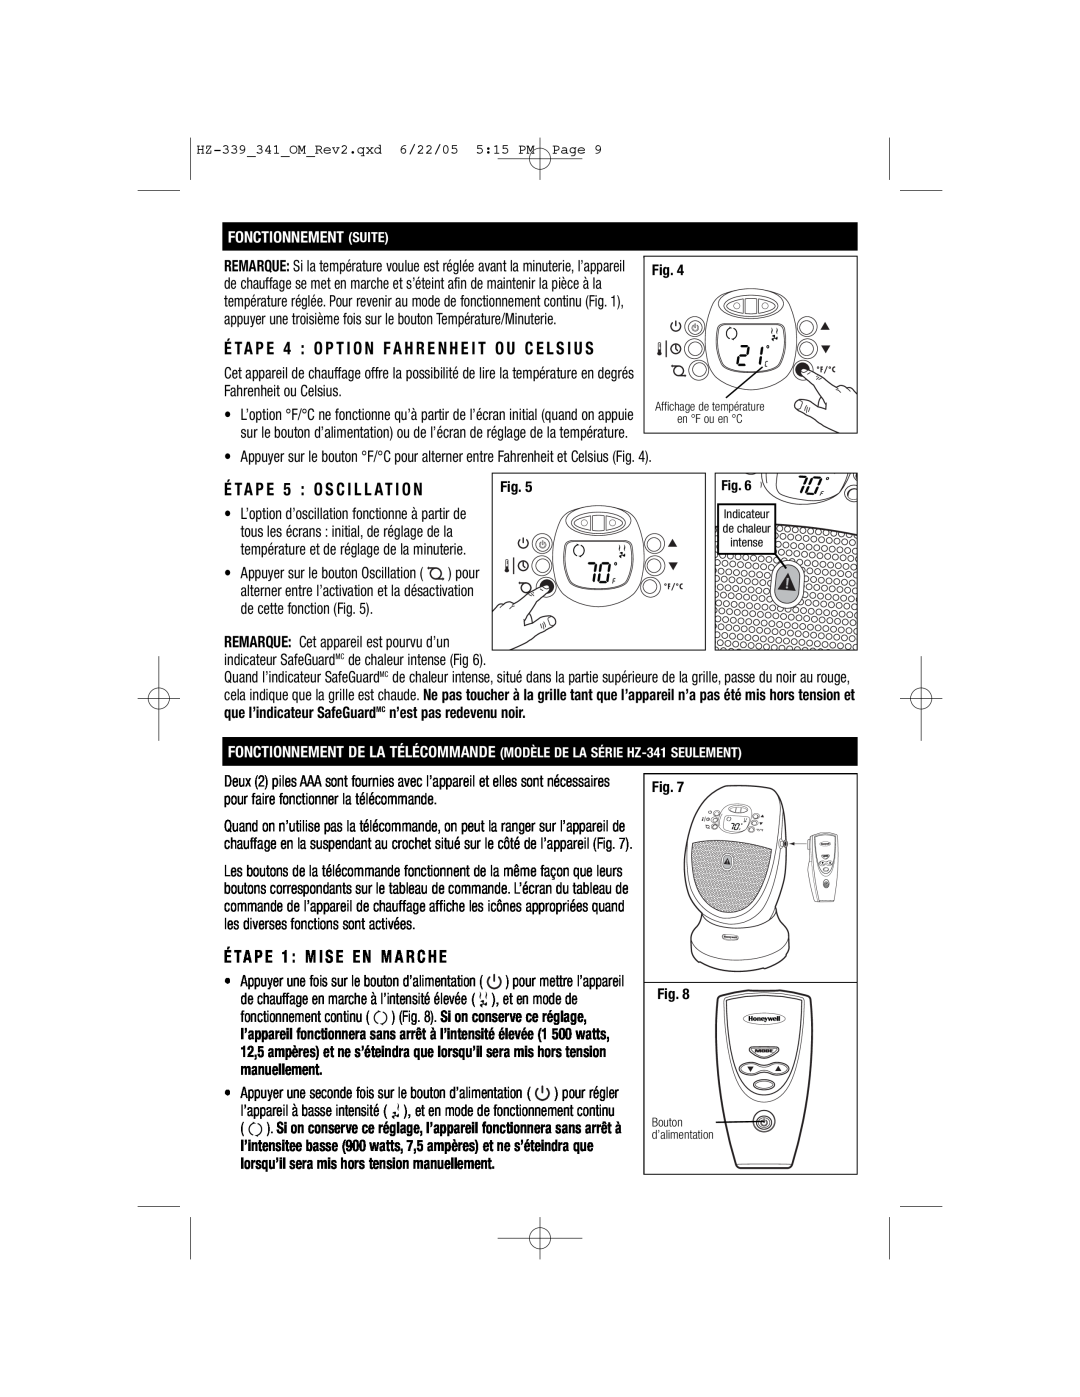 Honeywell HZ-339, HZ-341 important safety instructions Fonctionnement Suite 